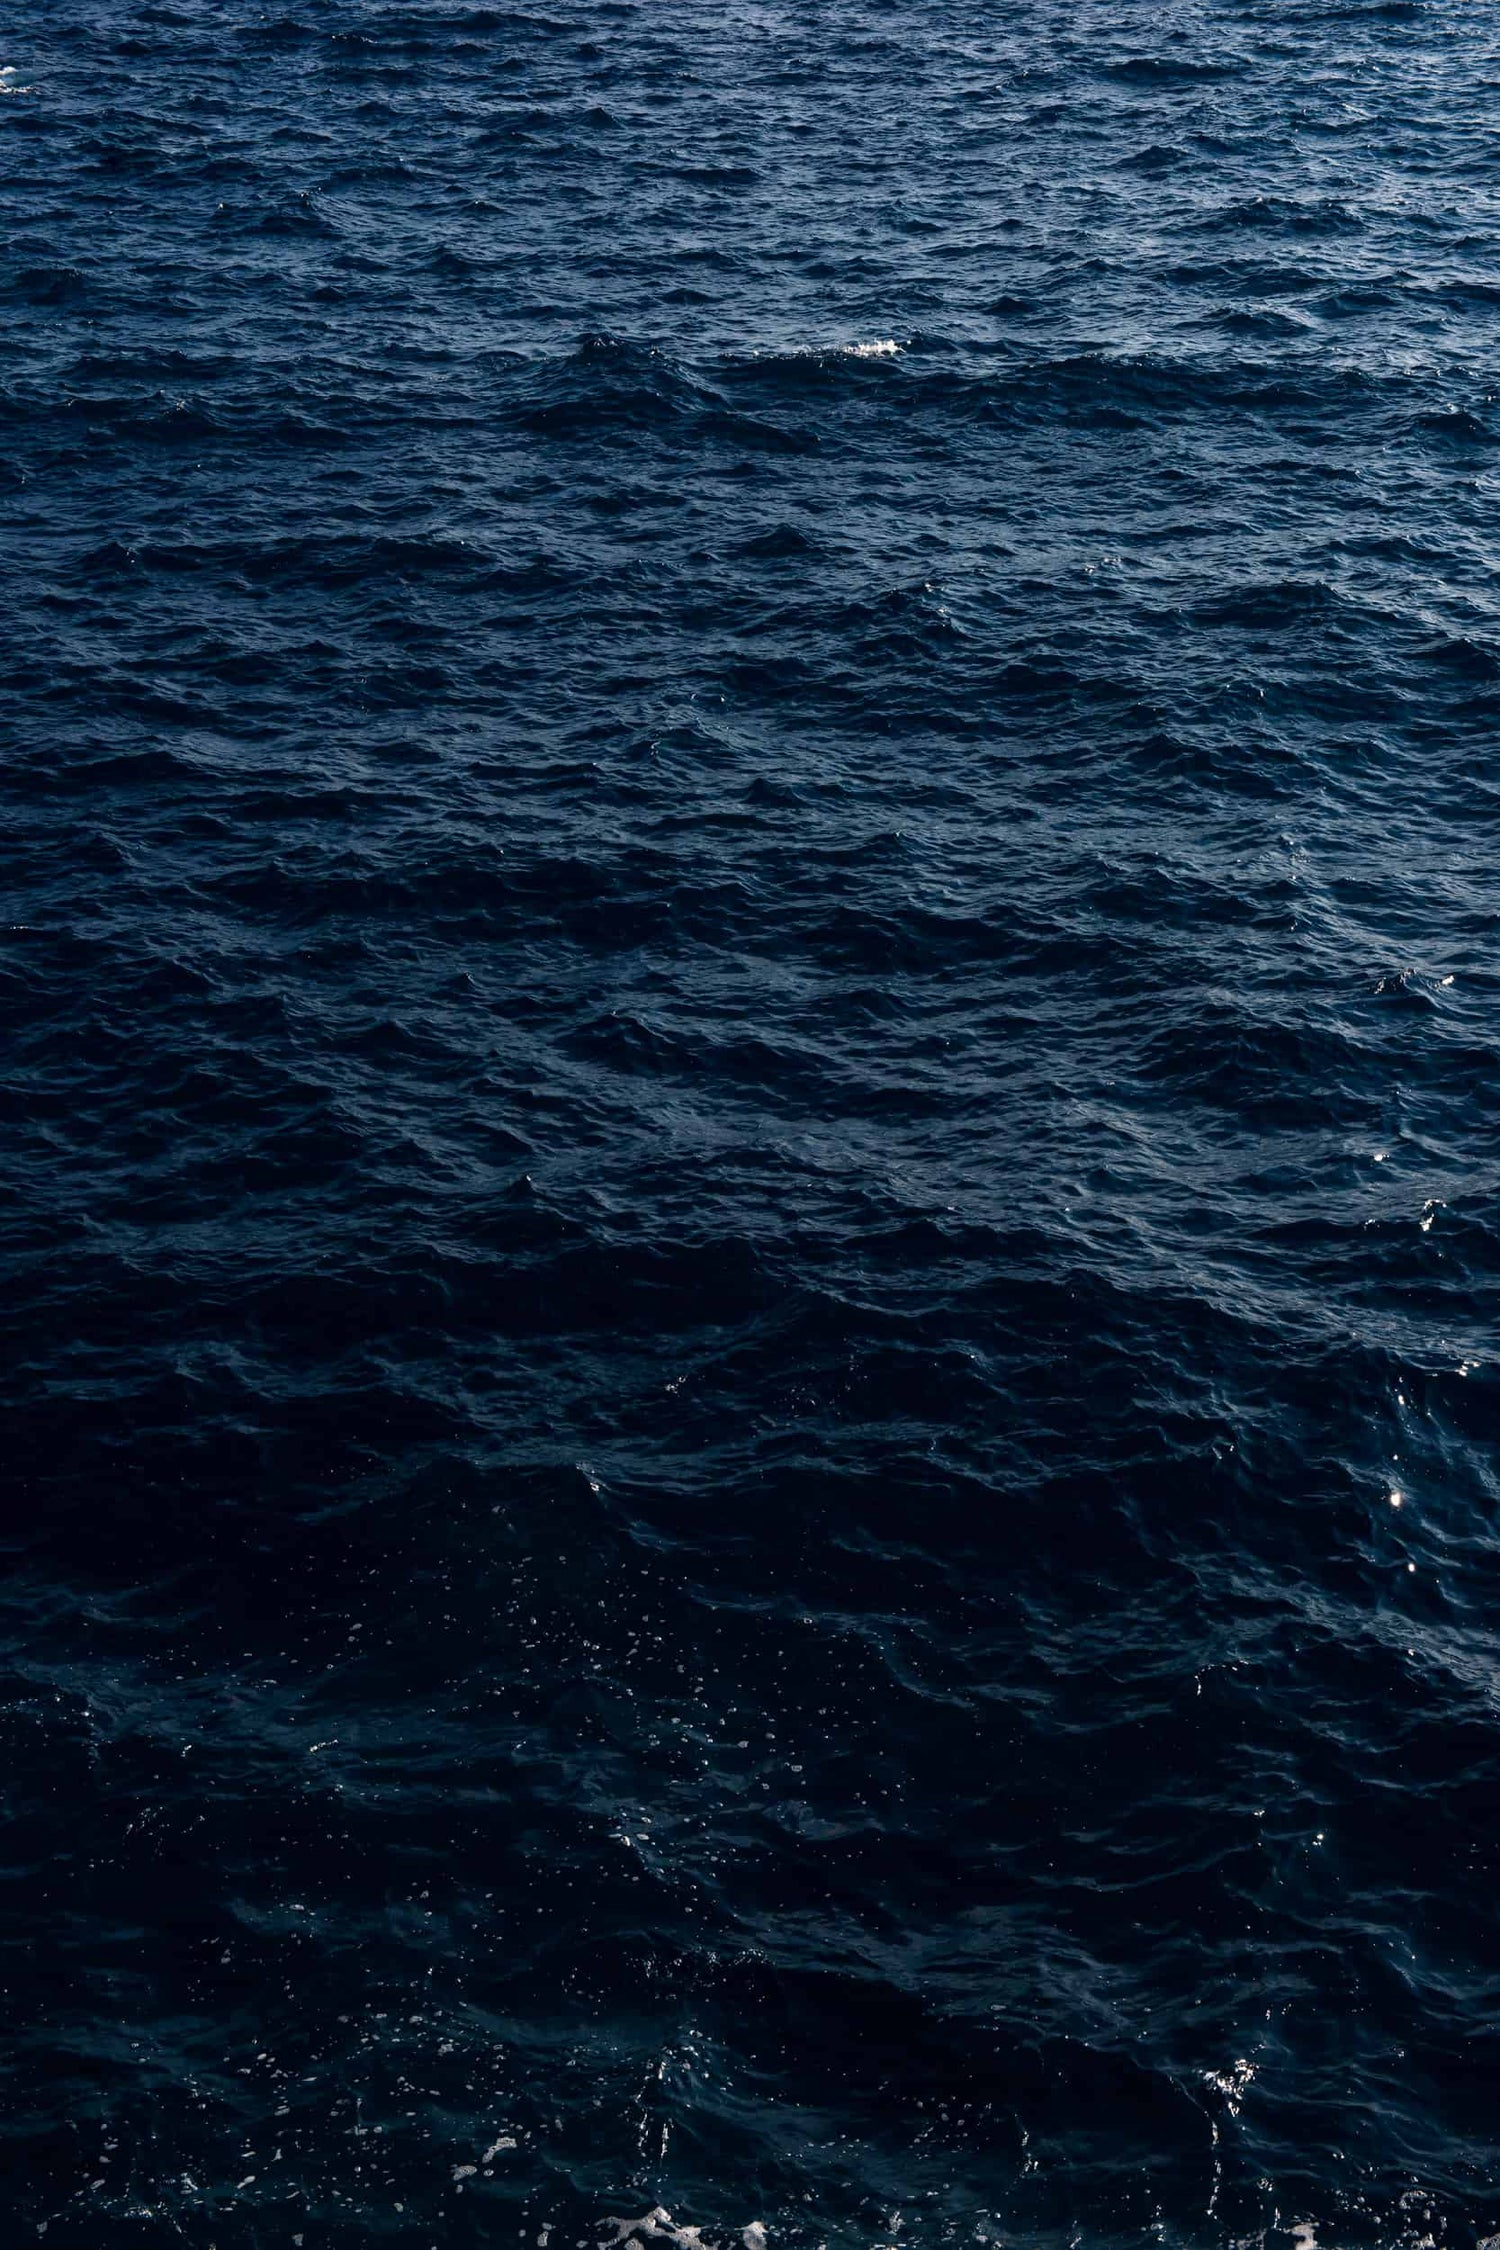 The artpiece 'Grand Bleu' by Mathieu Puga showing the seemingly endless deep blue ocean